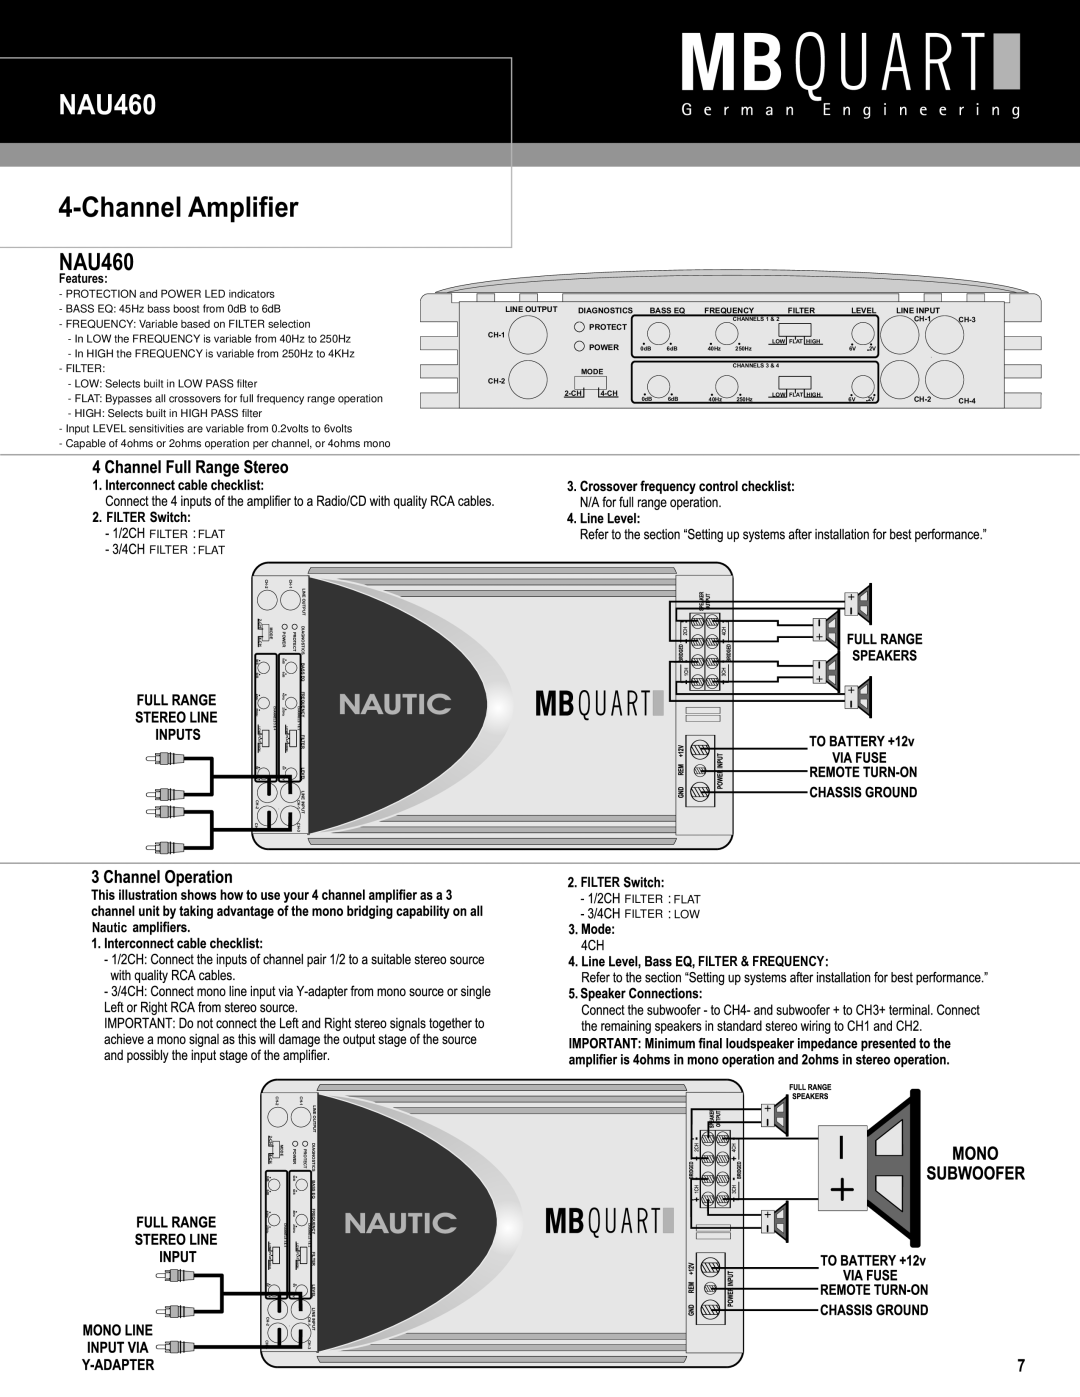 MB QUART NAU660, NAU260 NAU460, ChannelAmplifier, Nautic, Filter Flat Filter Flat, Filter & Frequency 